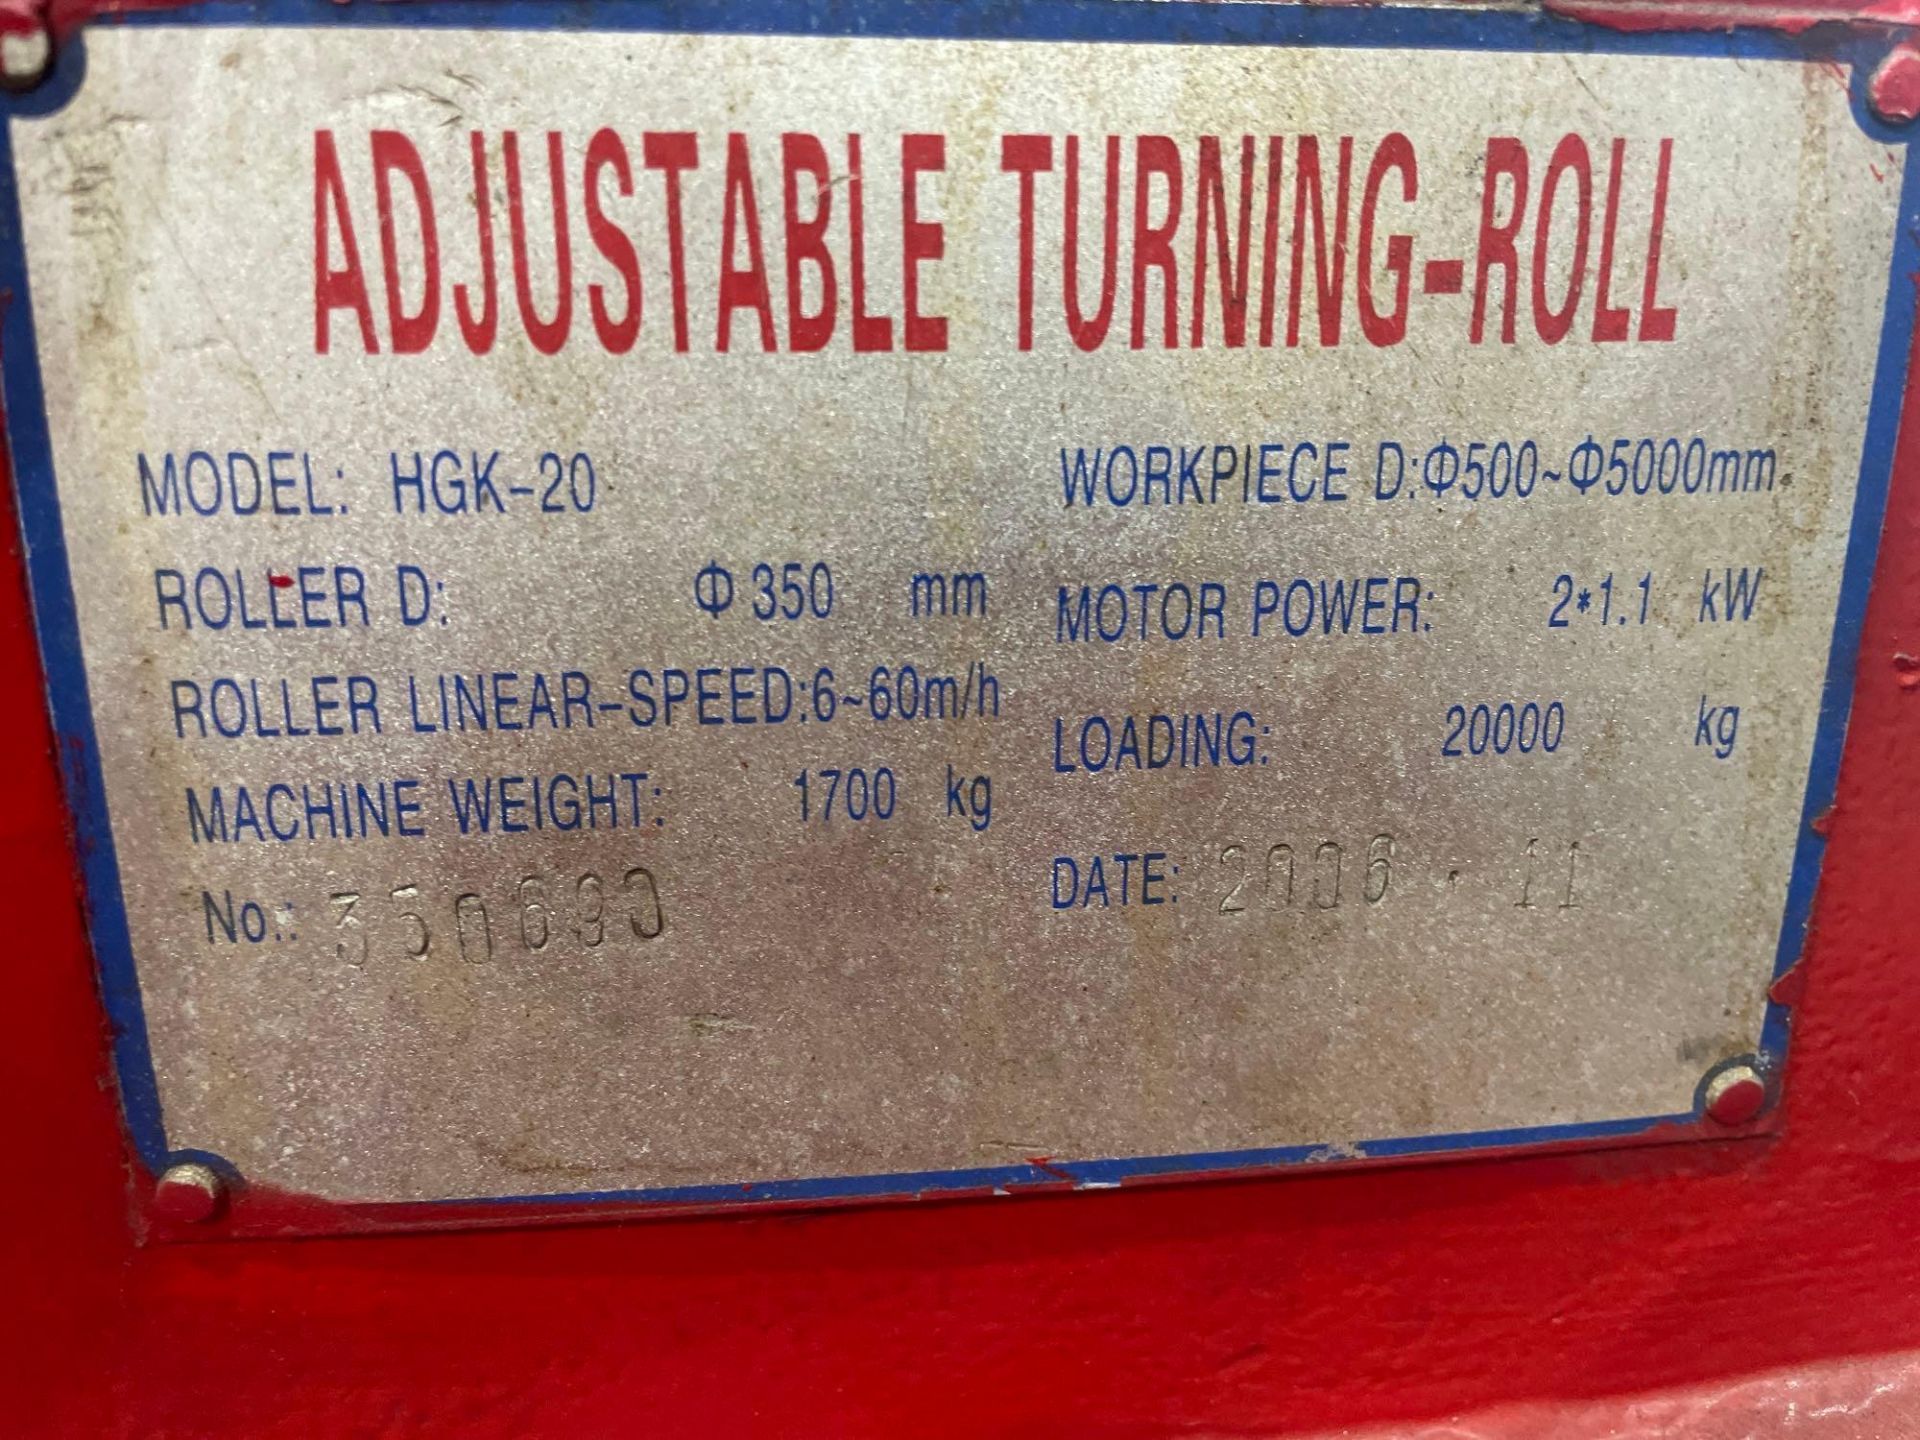 Lot of (2) Adjustable Turning Rolls, Model HGK-20 - Image 4 of 4